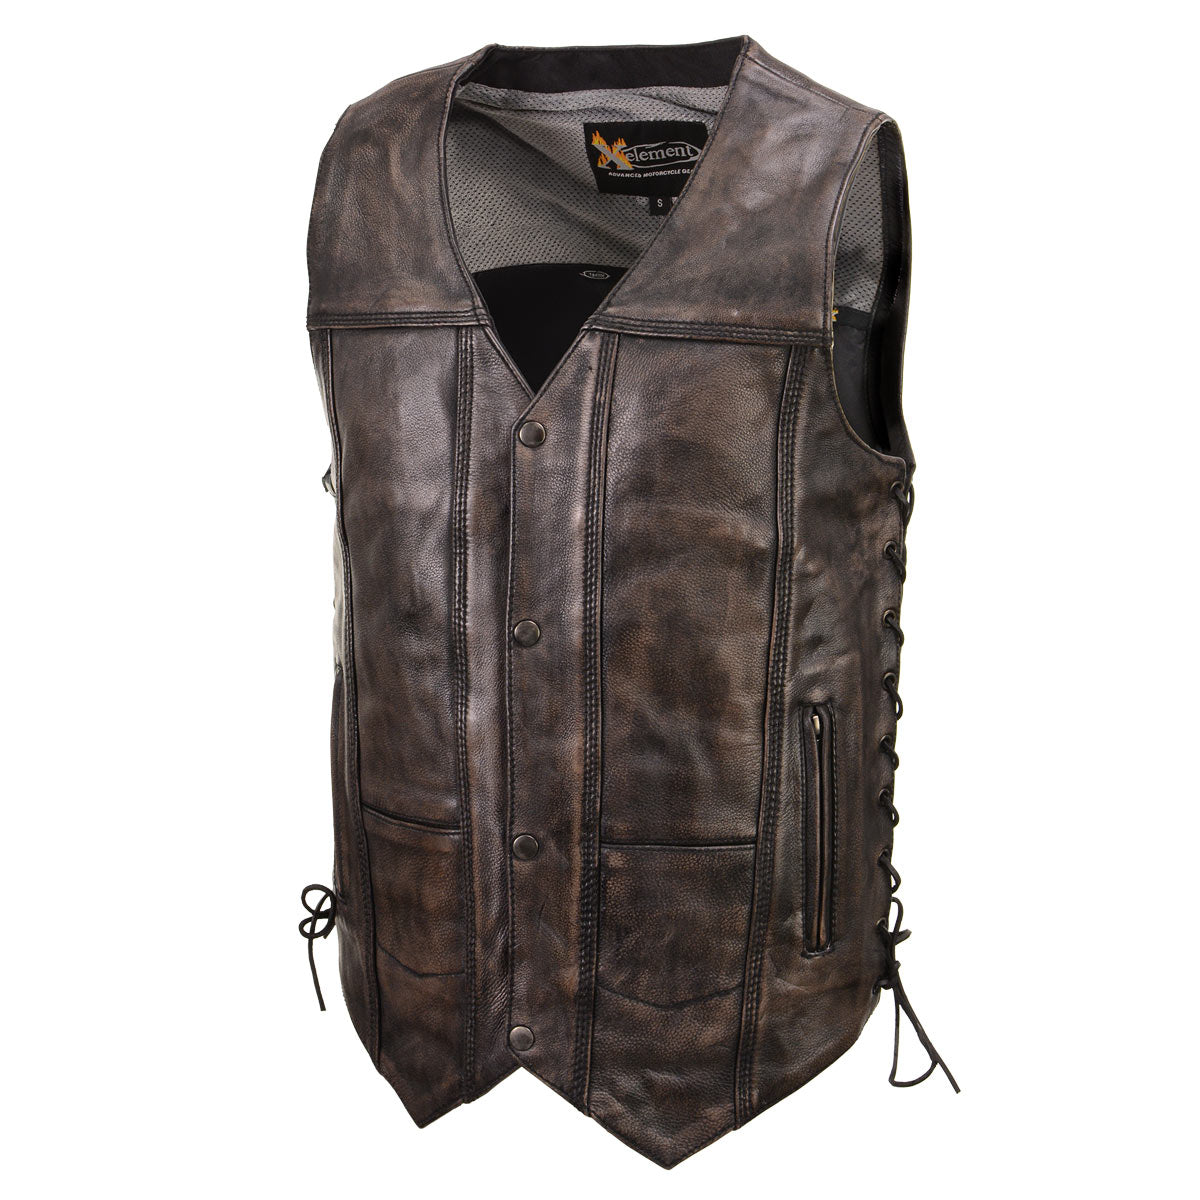 Xelement XS3540 Men's 'Wreck' Distressed Brown Multi-Pocket Motorcycle Biker Rider Leather Vest